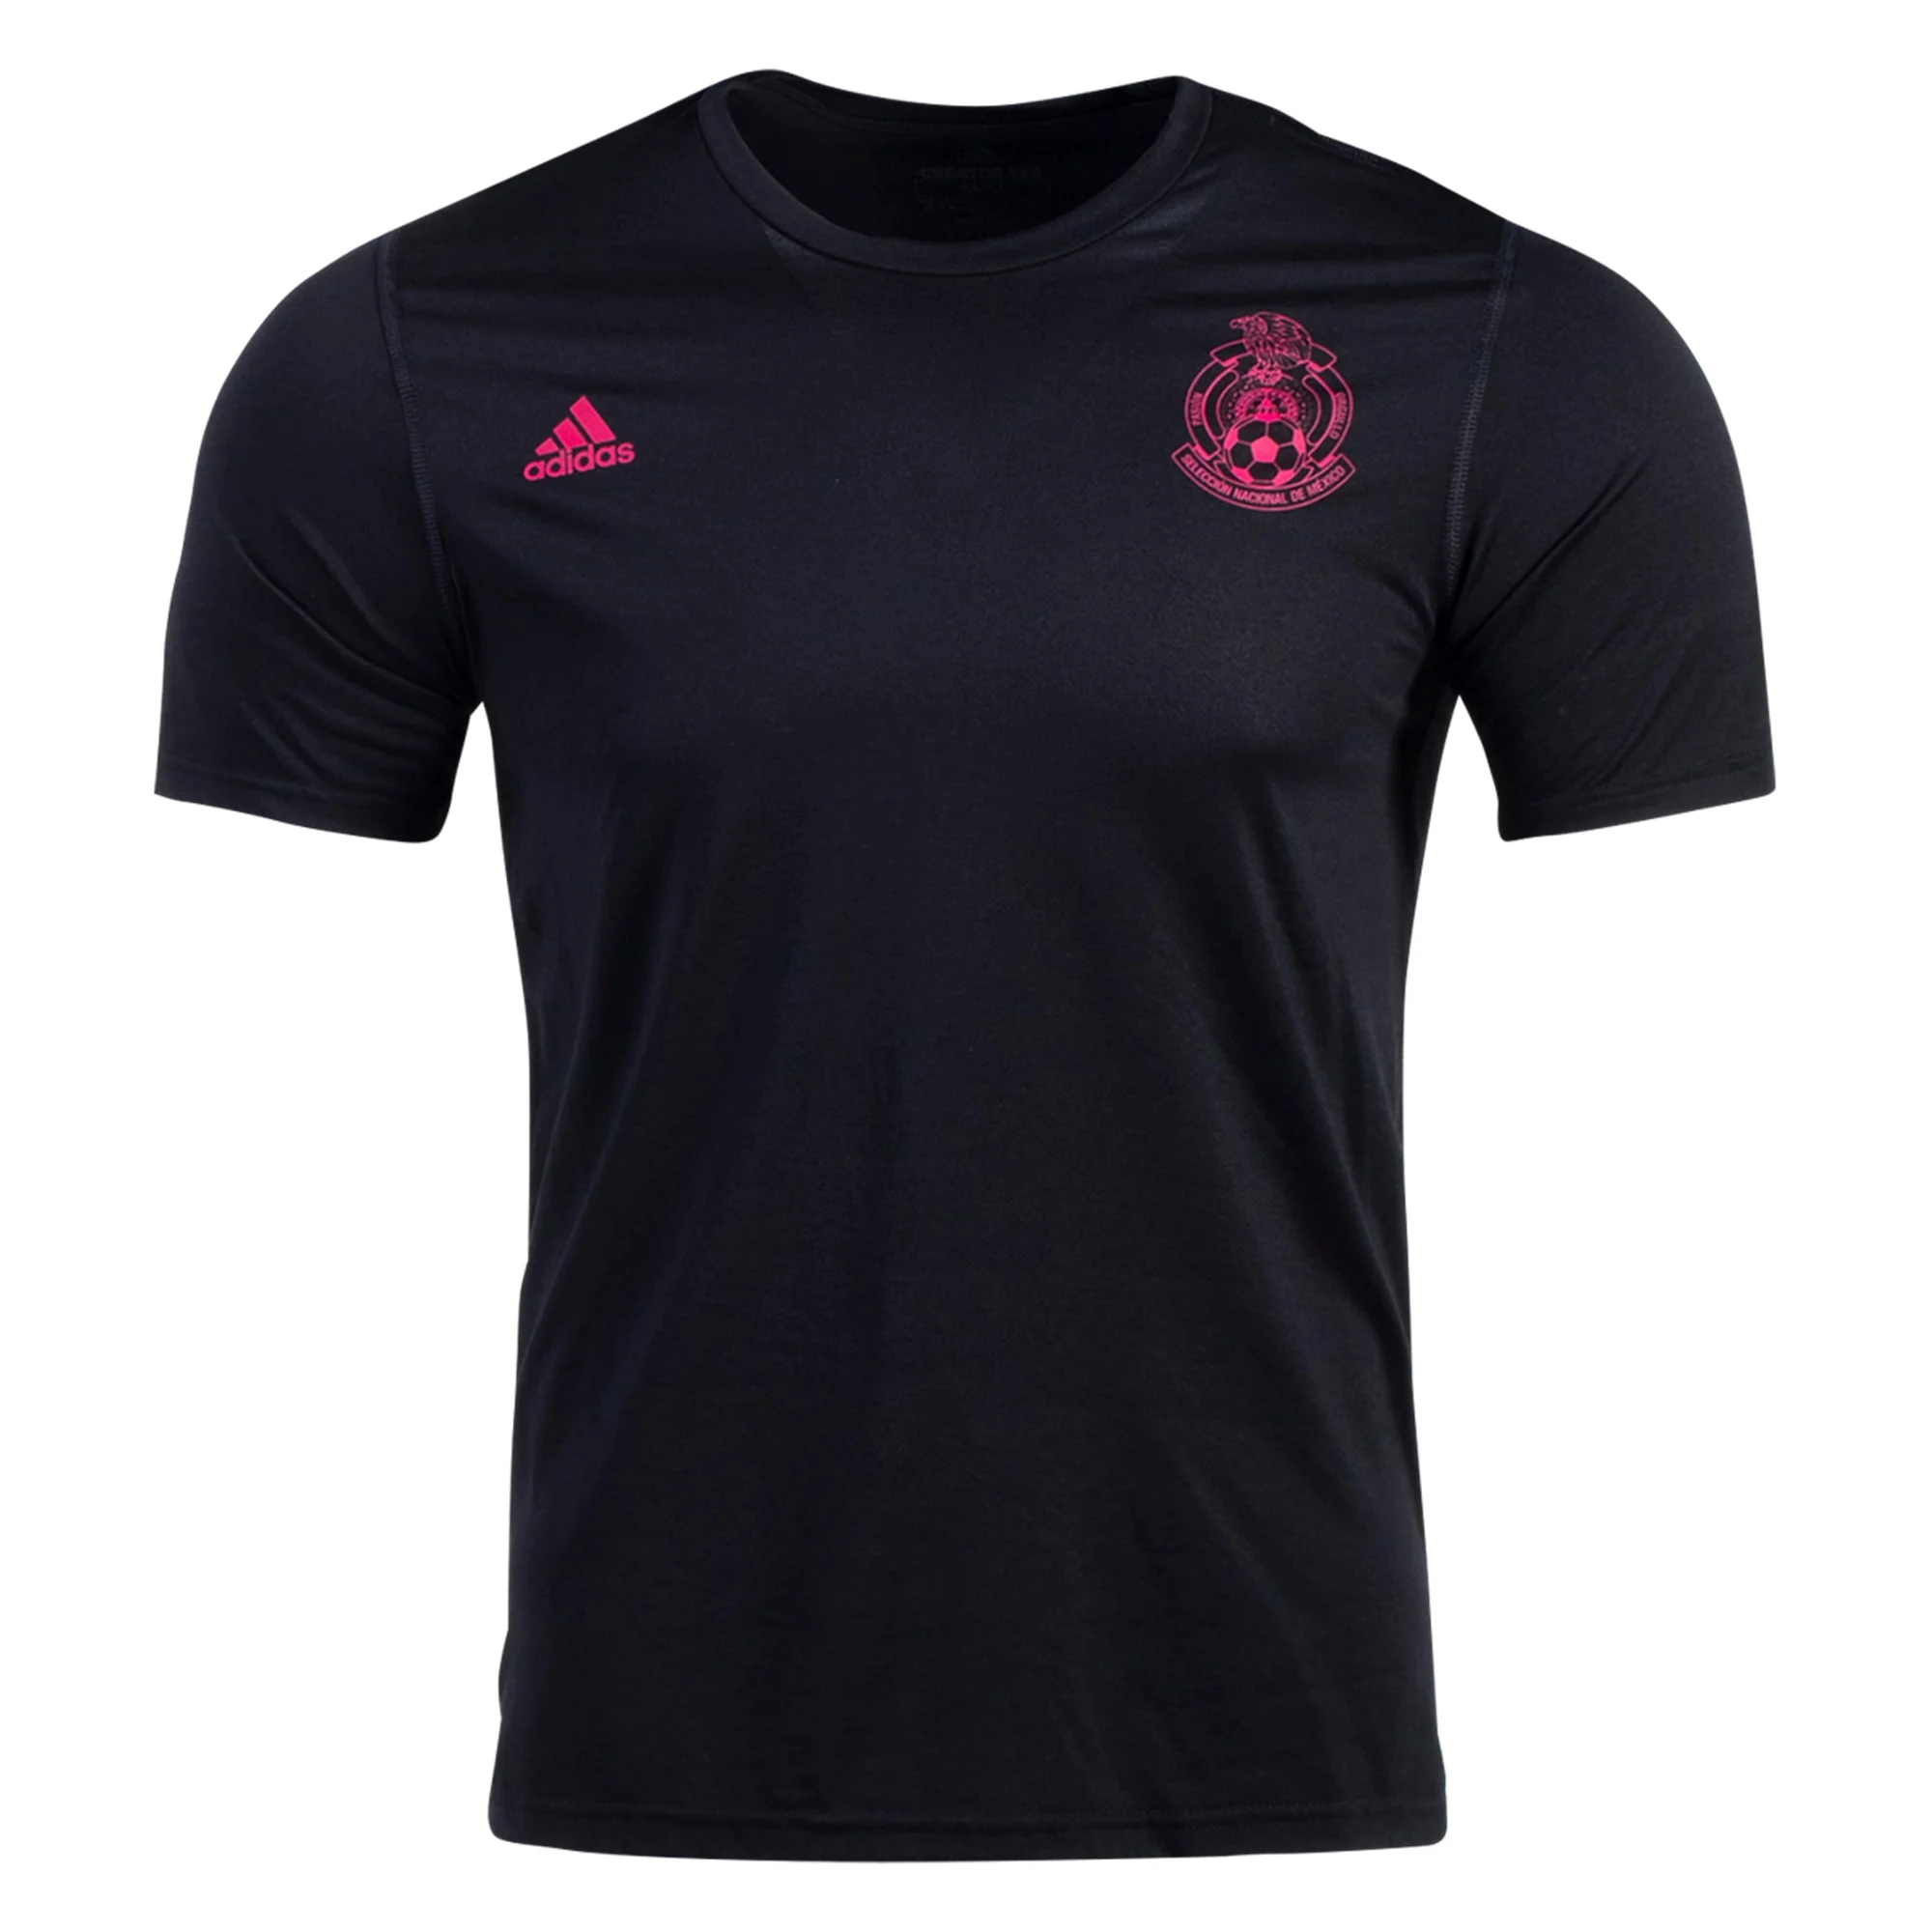 Adidas Mexico Creator T-Shirt- Black/Pink